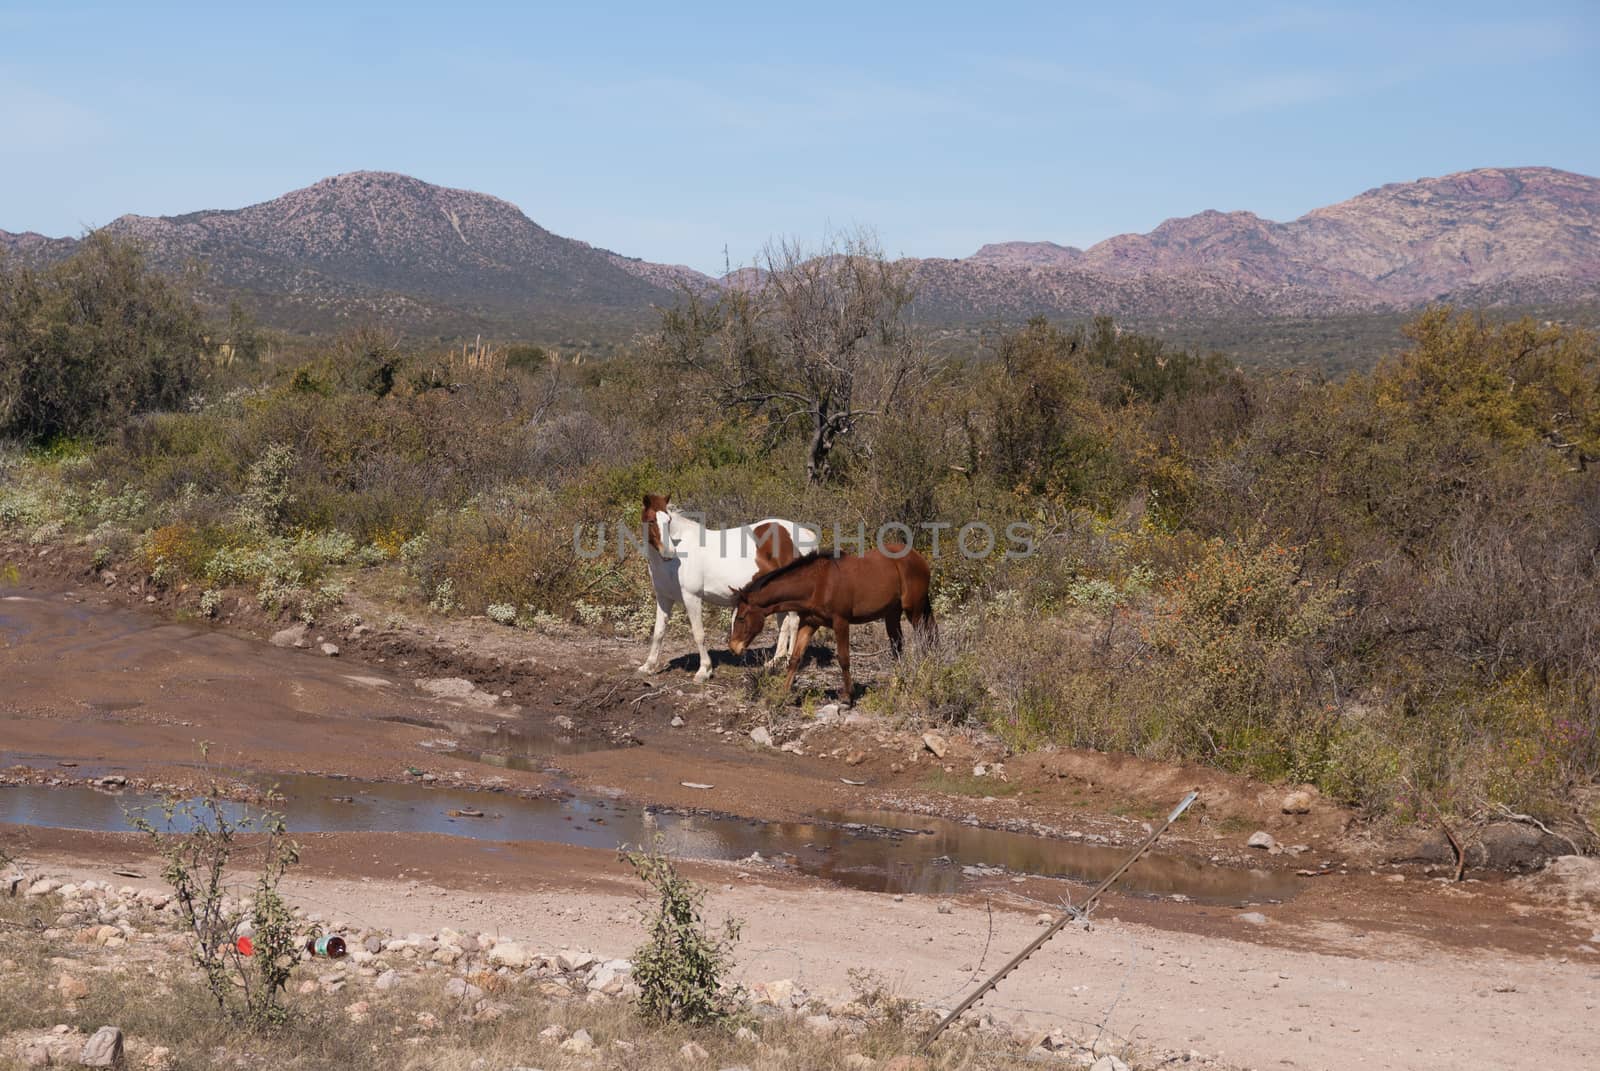 Two wild horses in Sonora Desert by emattil